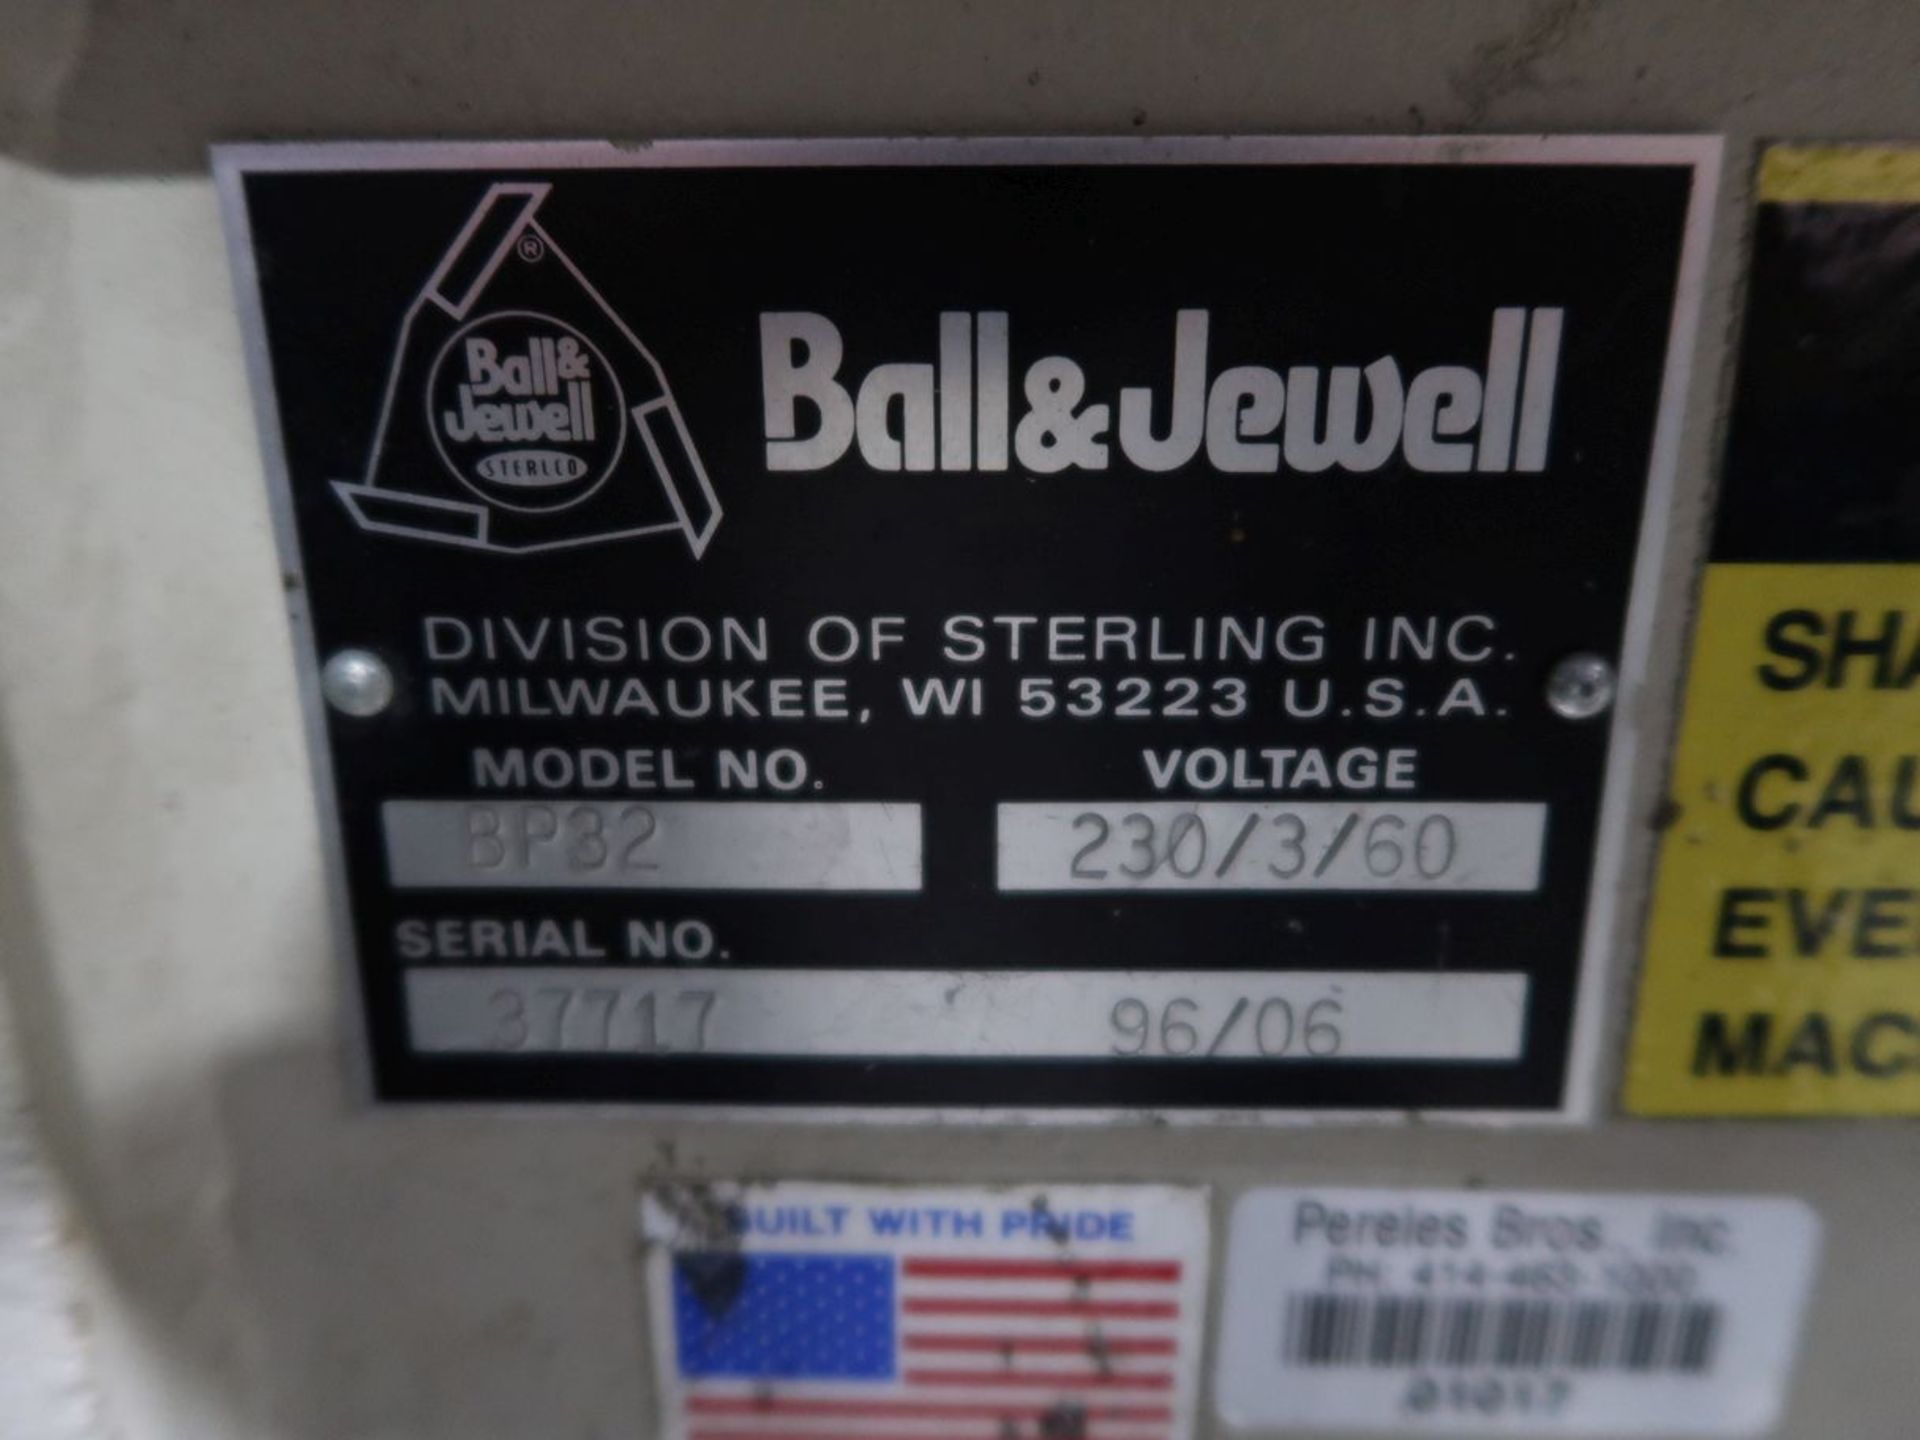 20-HP BALL & JEWELL MODEL BP32 GRANULATOR; S/N 37717 - Image 3 of 3